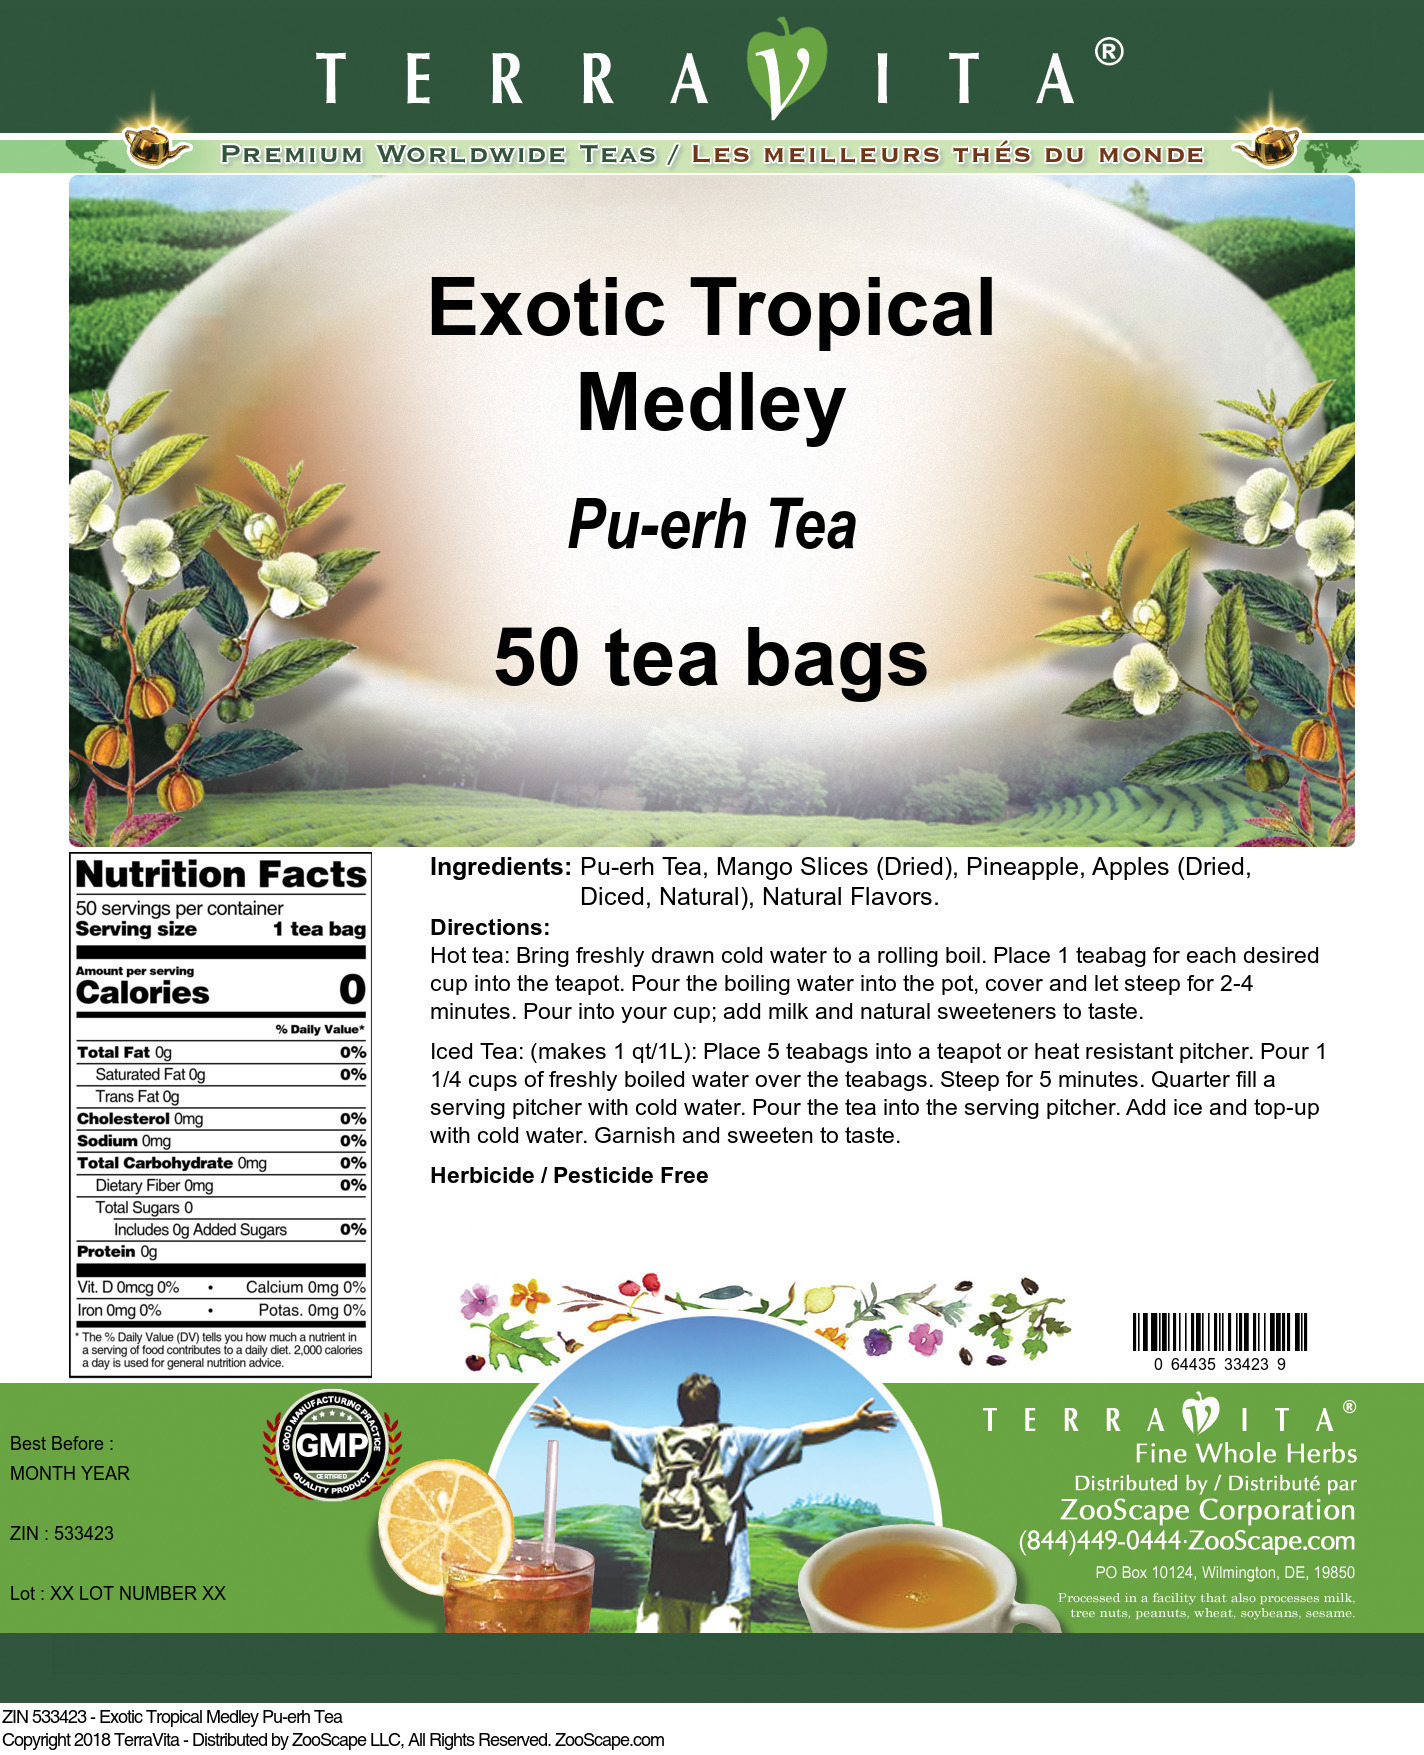 Exotic Tropical Medley Pu-erh Tea - Label